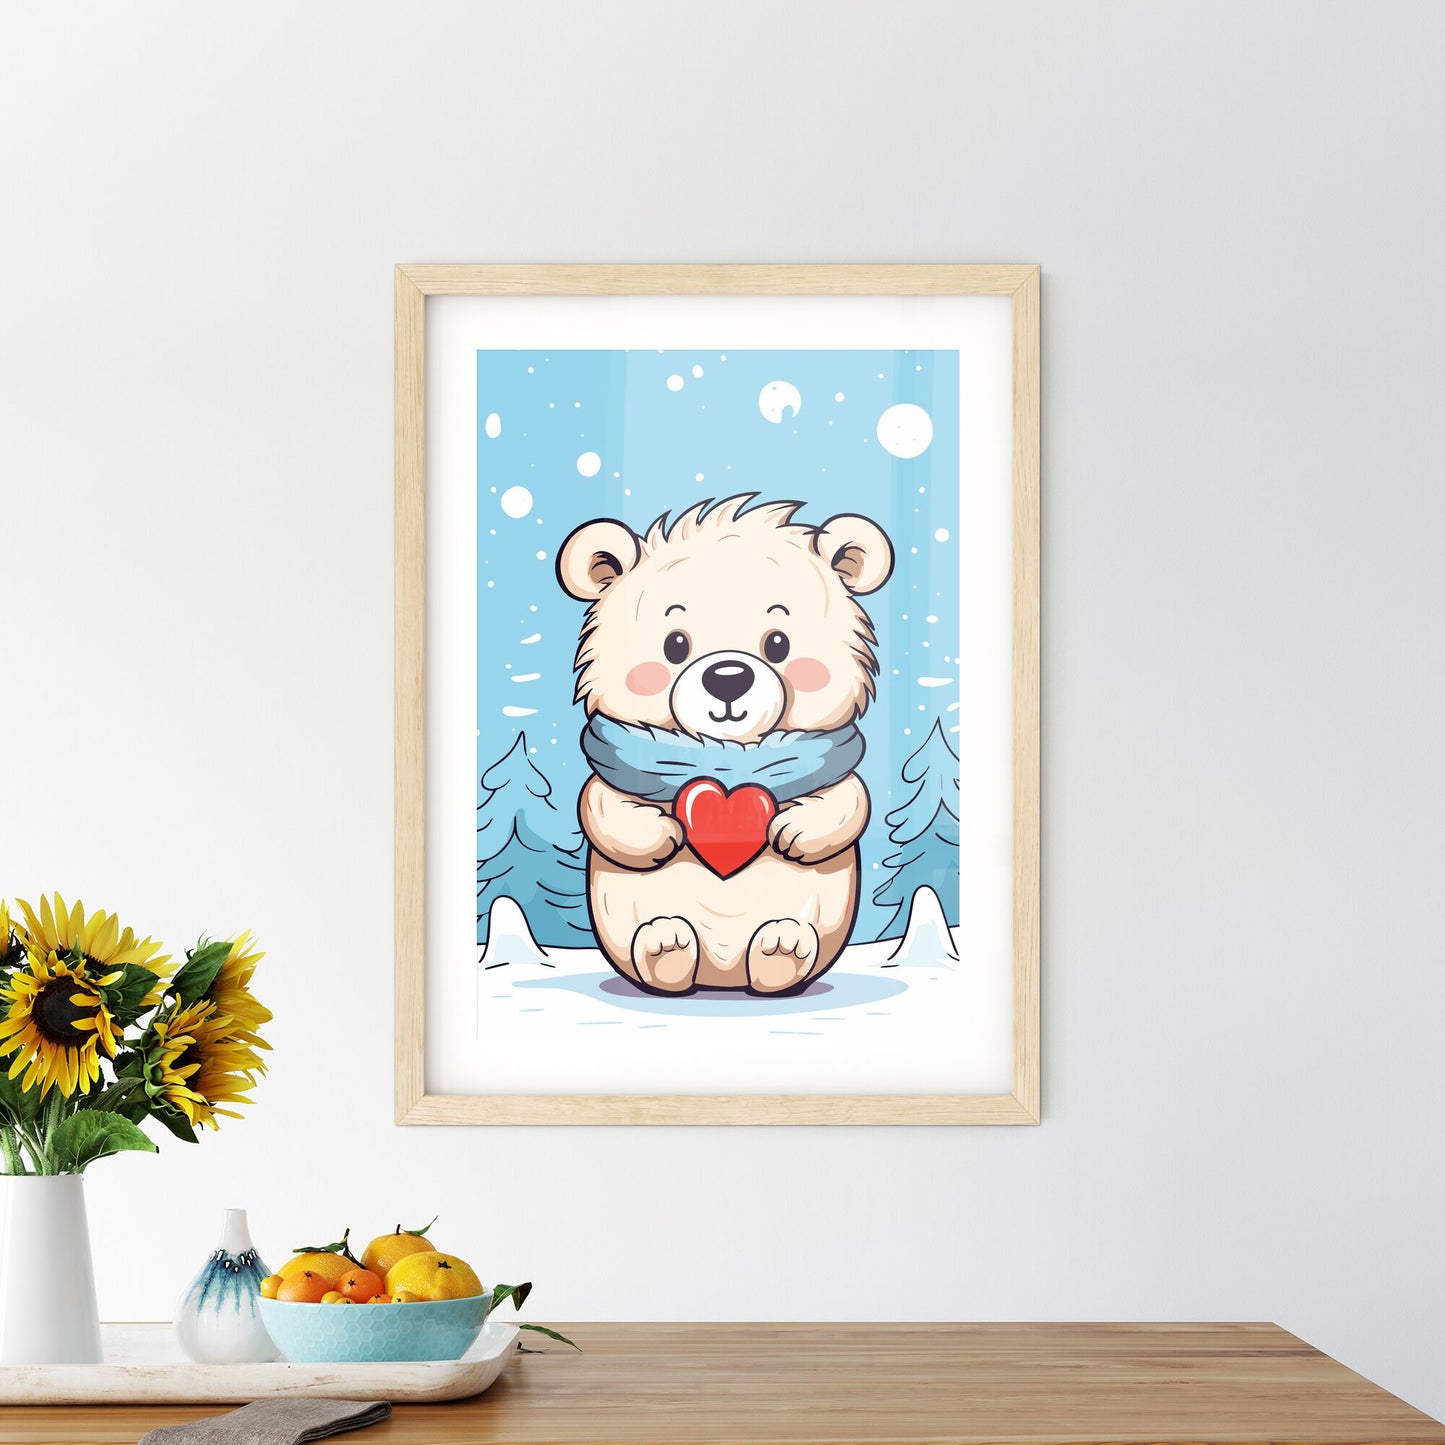 Merry Christmas Card With A Cute Bear Huging A Heart - A Cartoon Of A Bear Holding A Heart Default Title